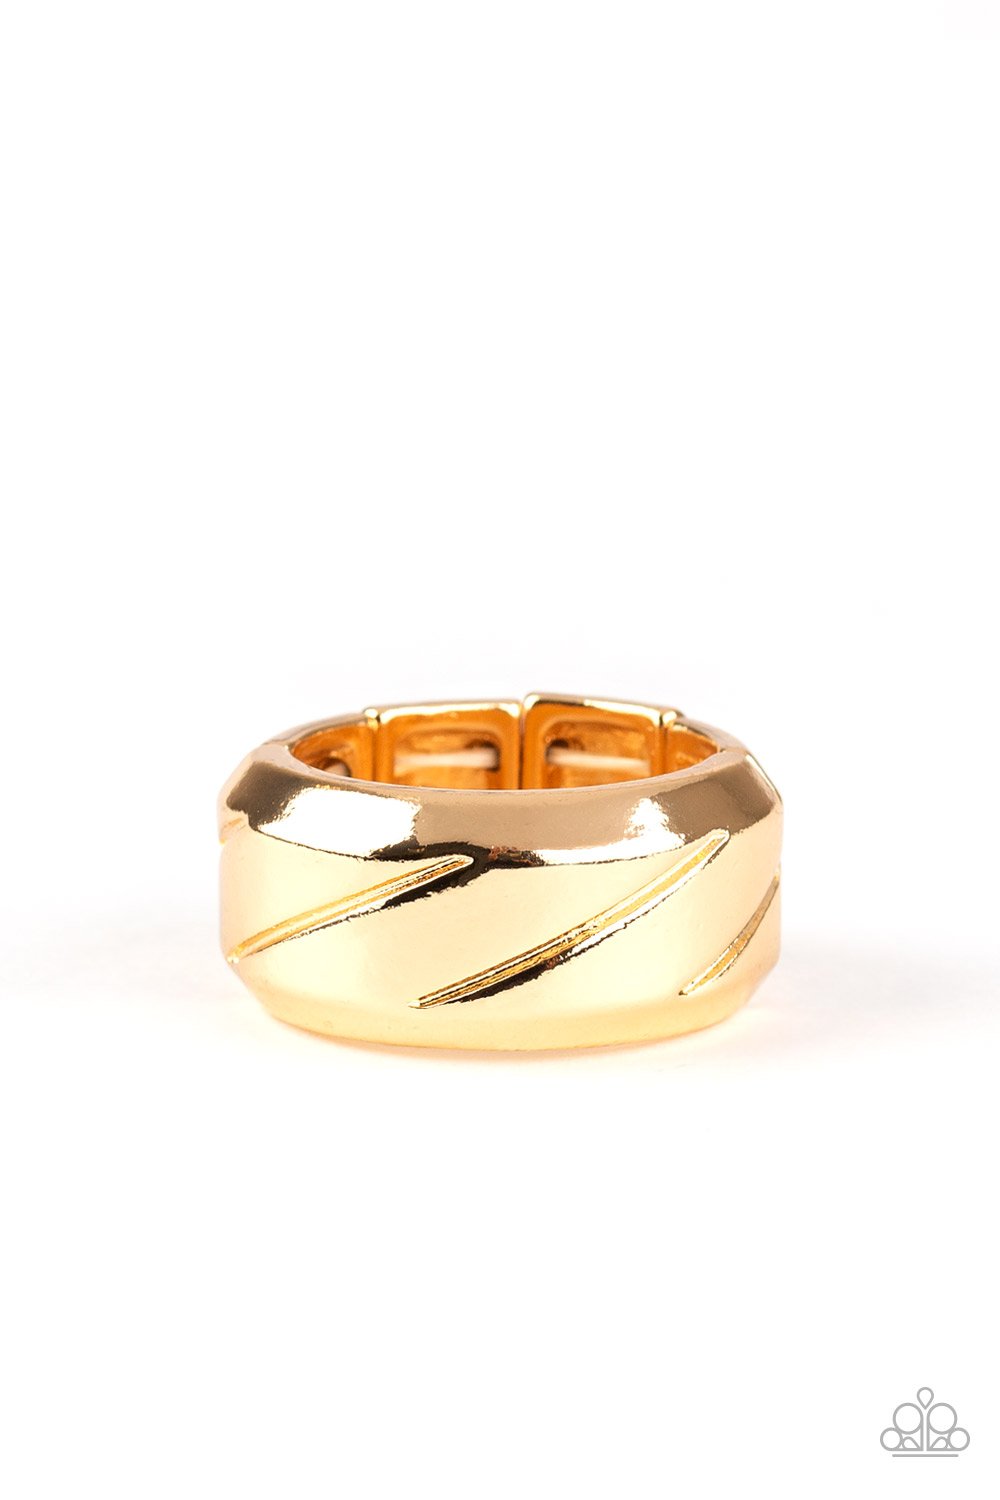 Sideswiped Gold Ring freeshipping - JewLz4u Gemstone Gallery